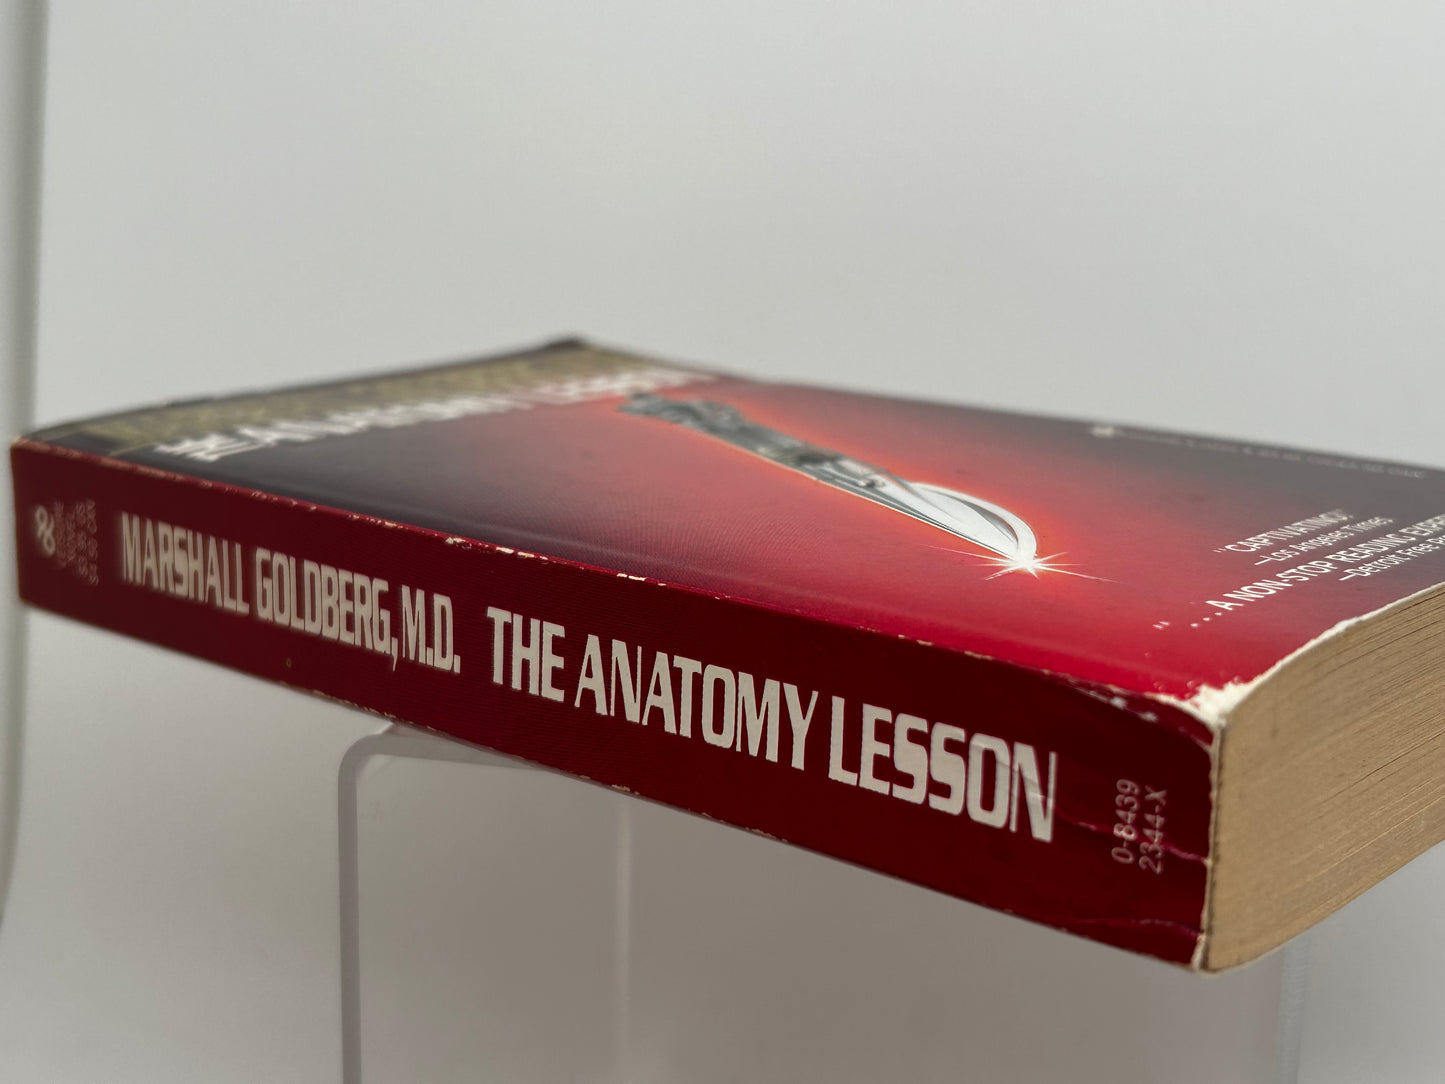 Anatomy Lesson LEISURE Paperback Marshall Goldberg M.D. SF12